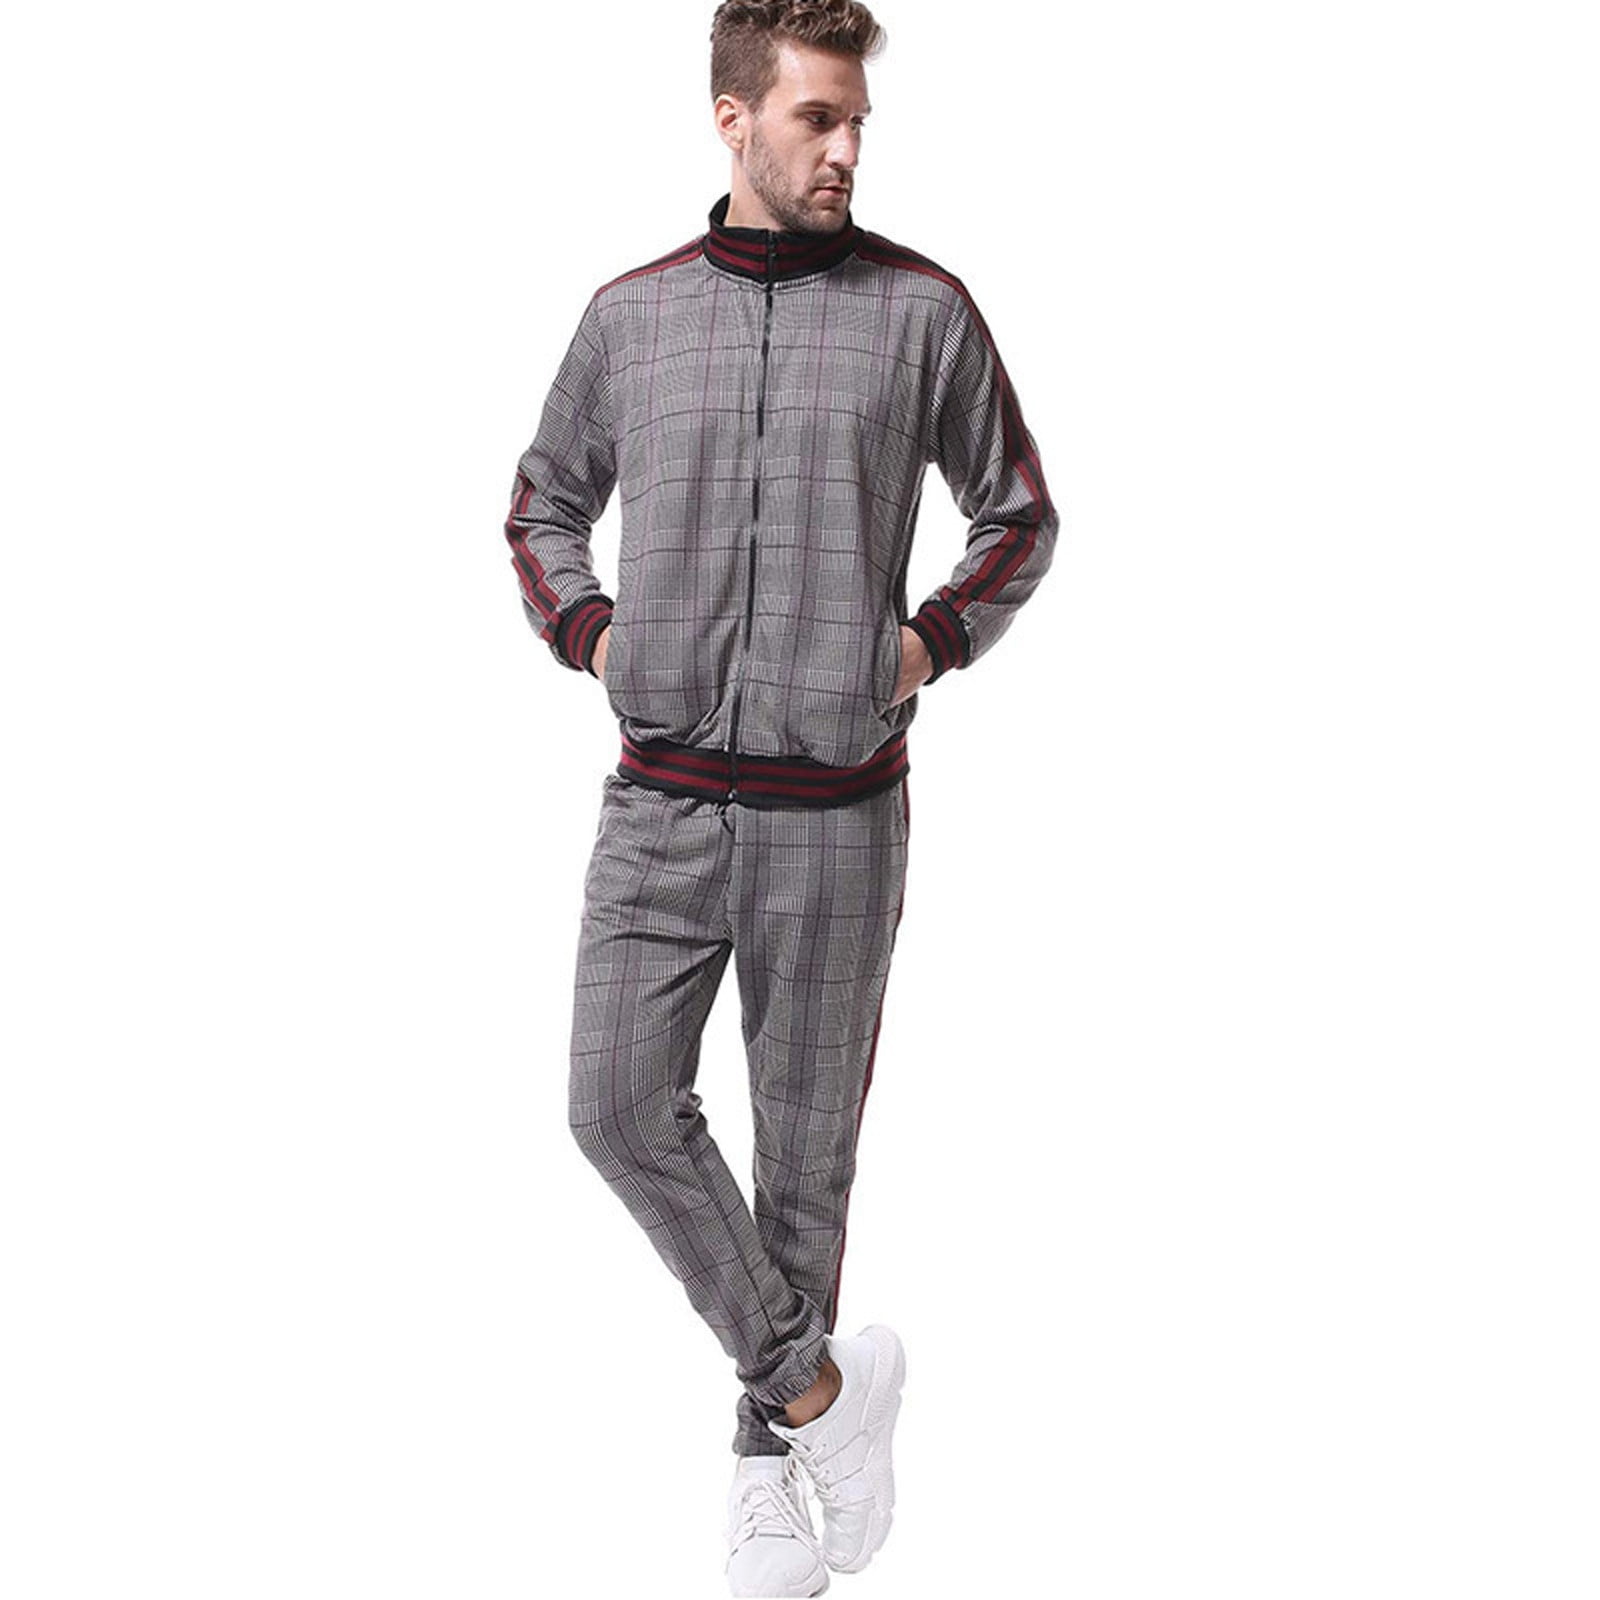 Penkiiy Mens Sweatsuits Sets Men's Jogging Suit Tracksuit Plaid Print Zip  Sweatshirt Top And Trouser Set Gray Mens Sets 